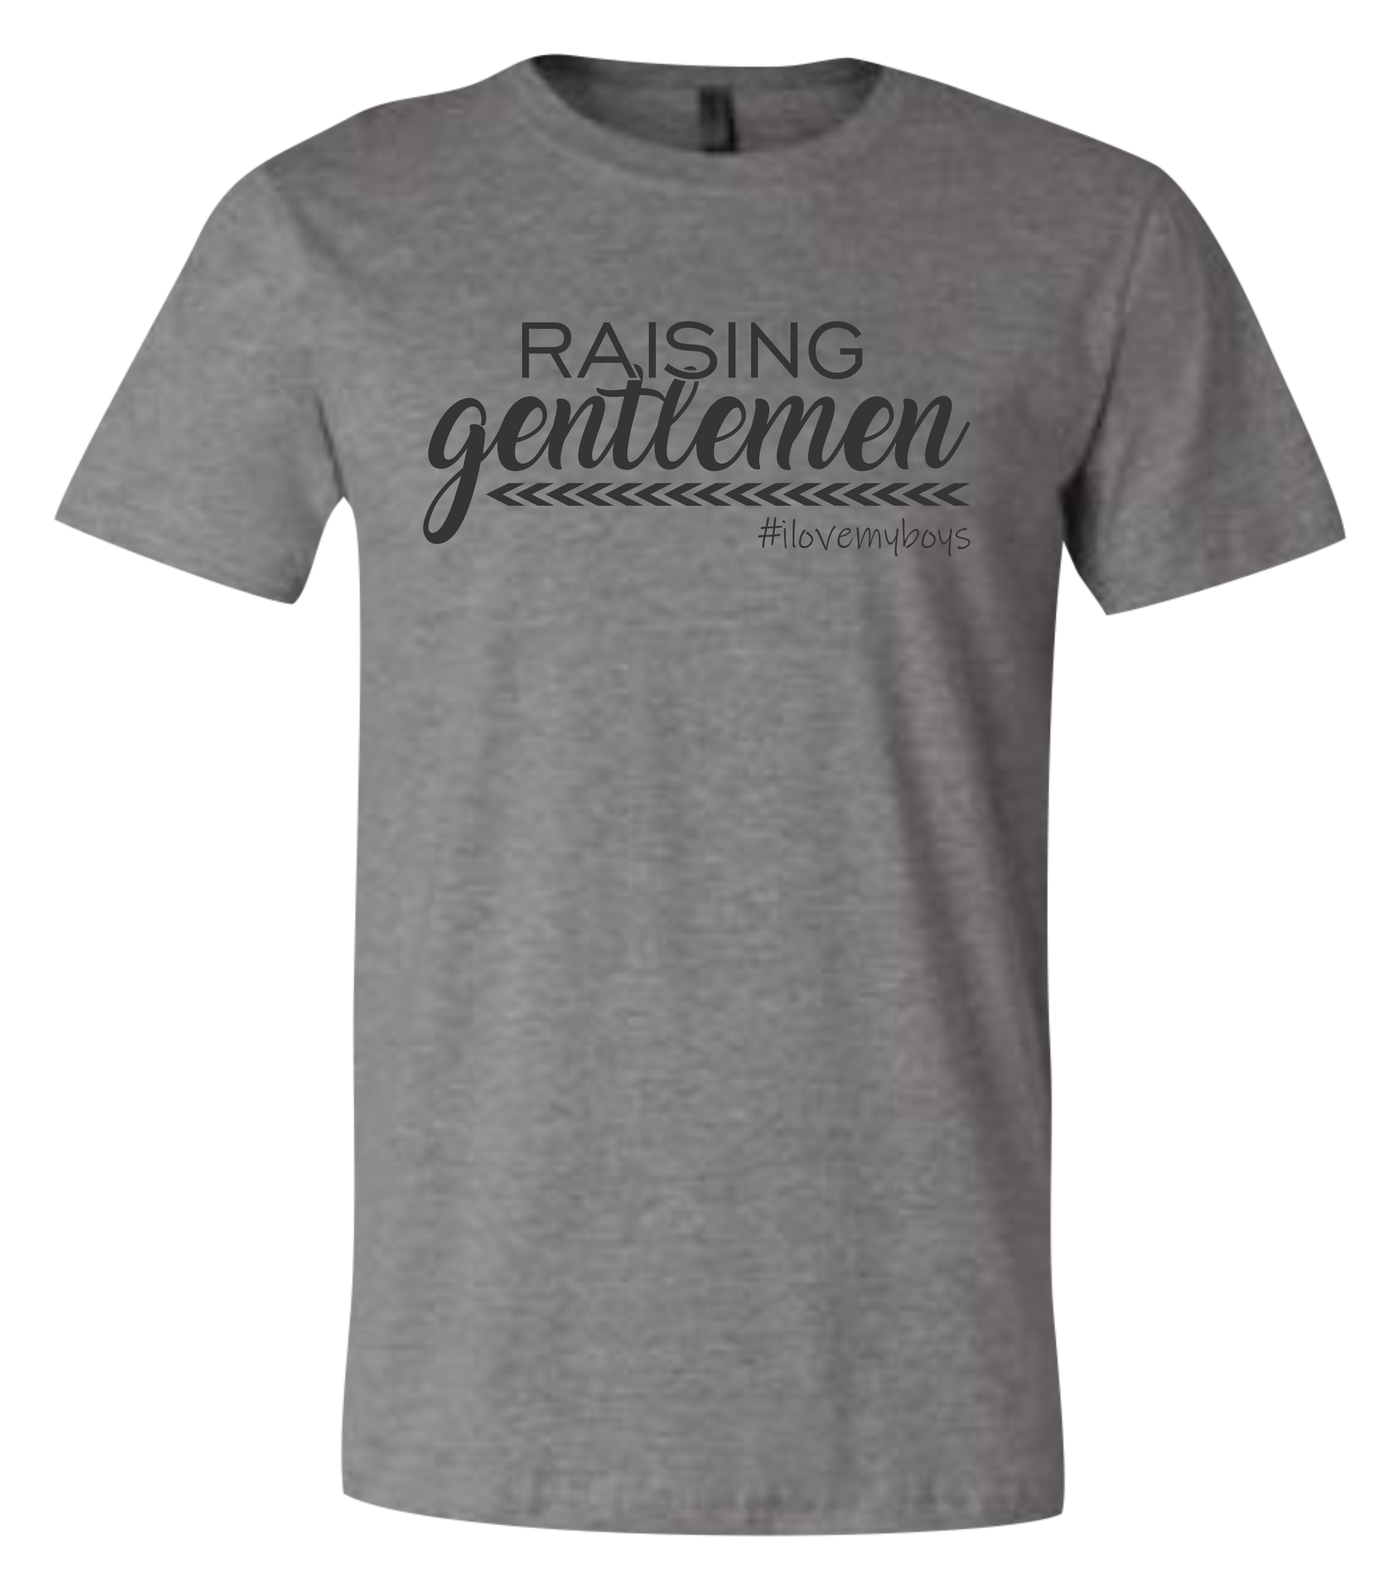 Raising Gentlemen Short Sleeve Graphic T-shirt